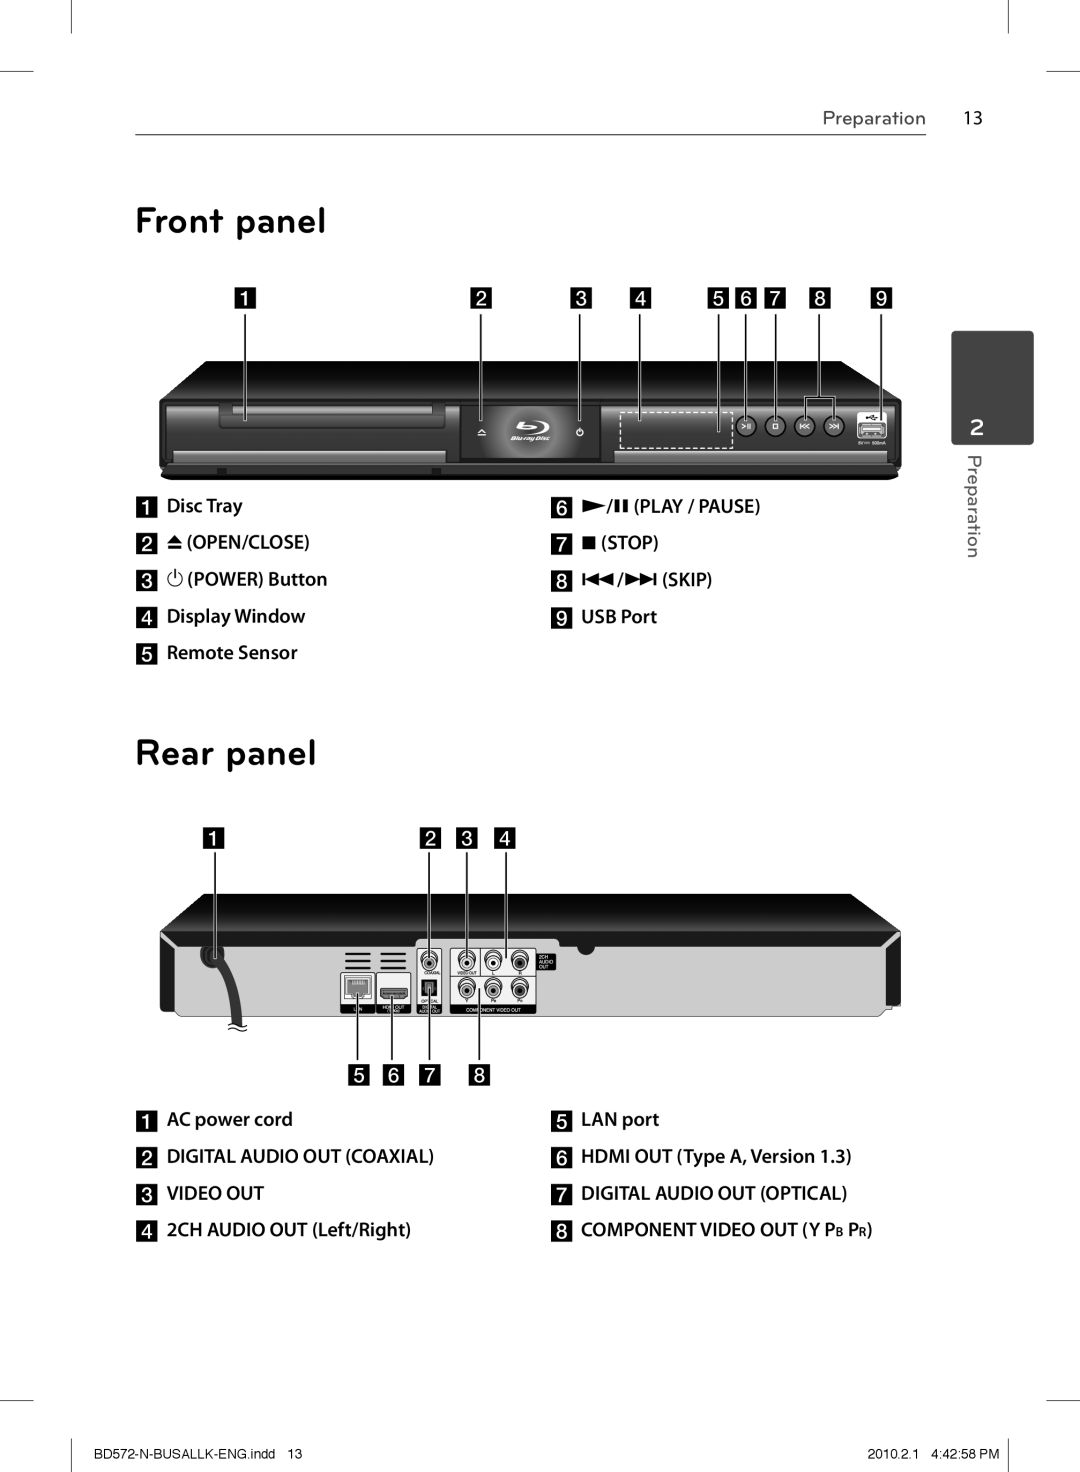 LG Electronics BD570 owner manual Front panel, Rear panel, Preparation 